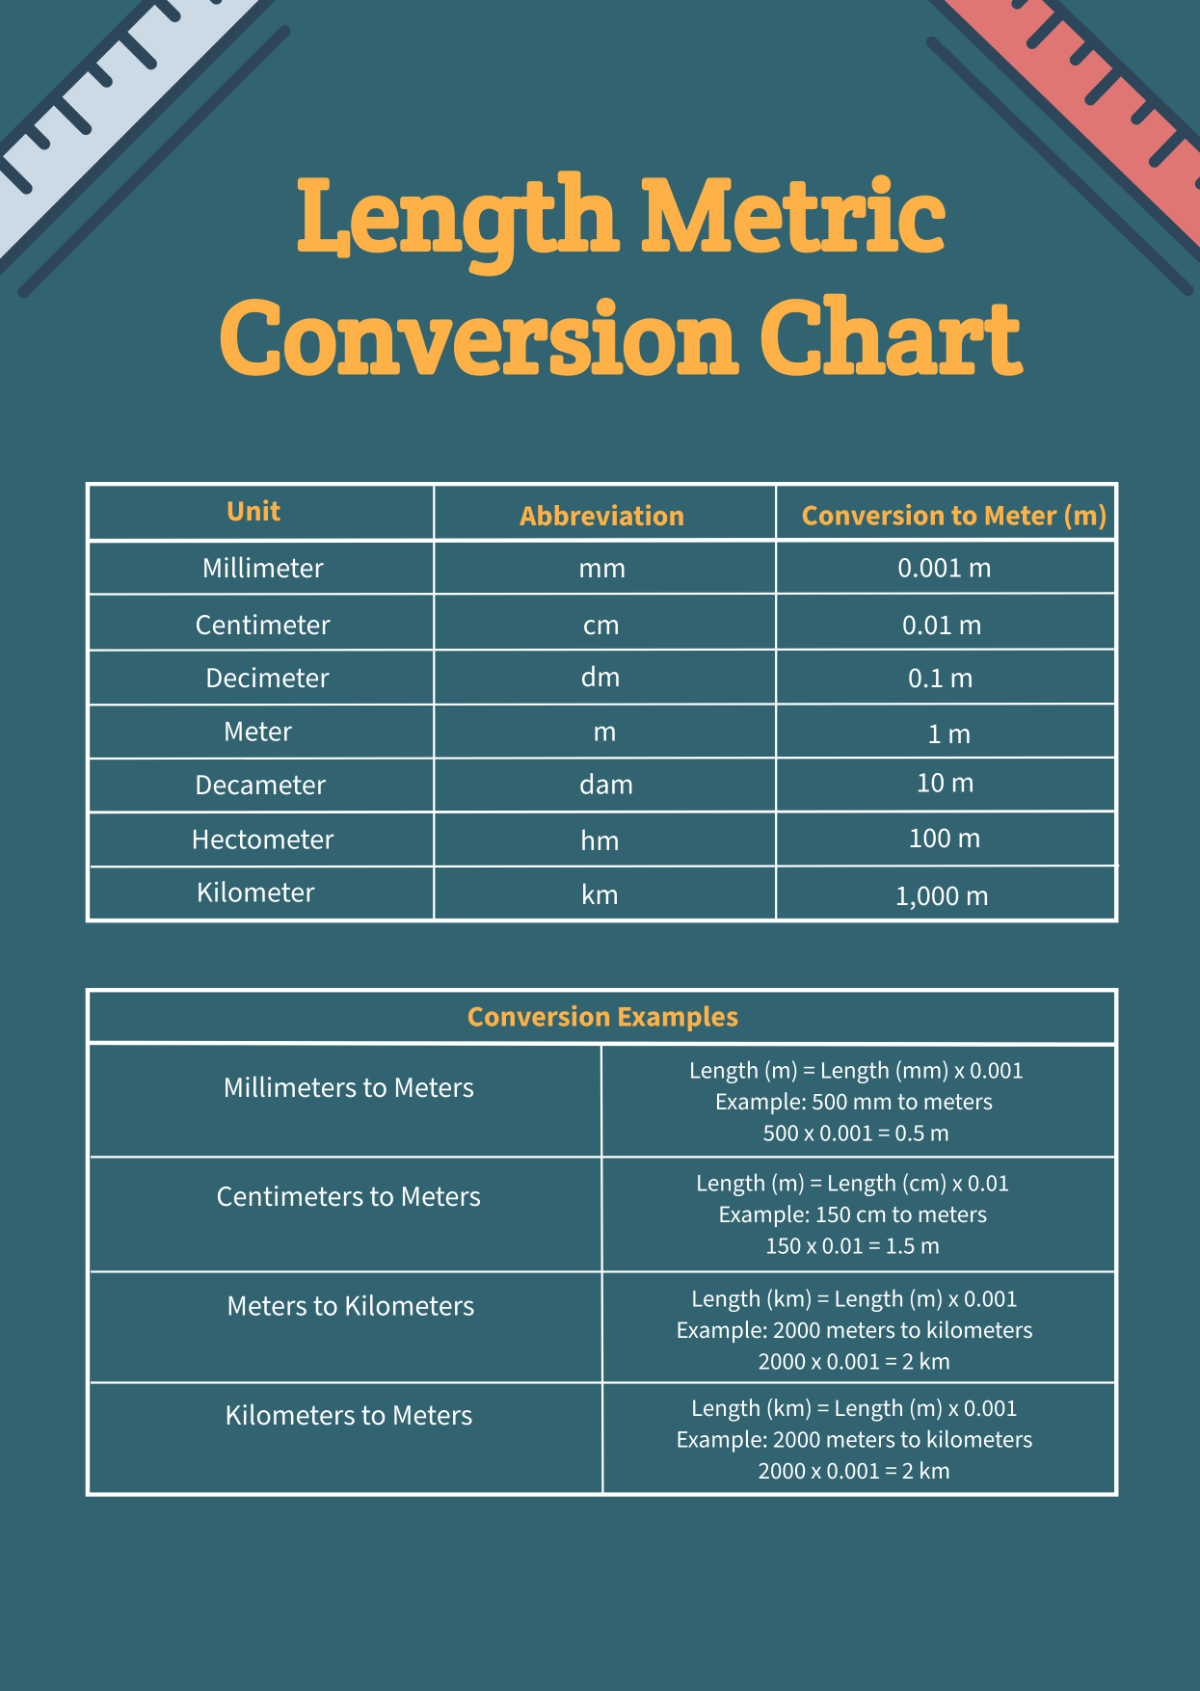 Length Metric Conversion Chart